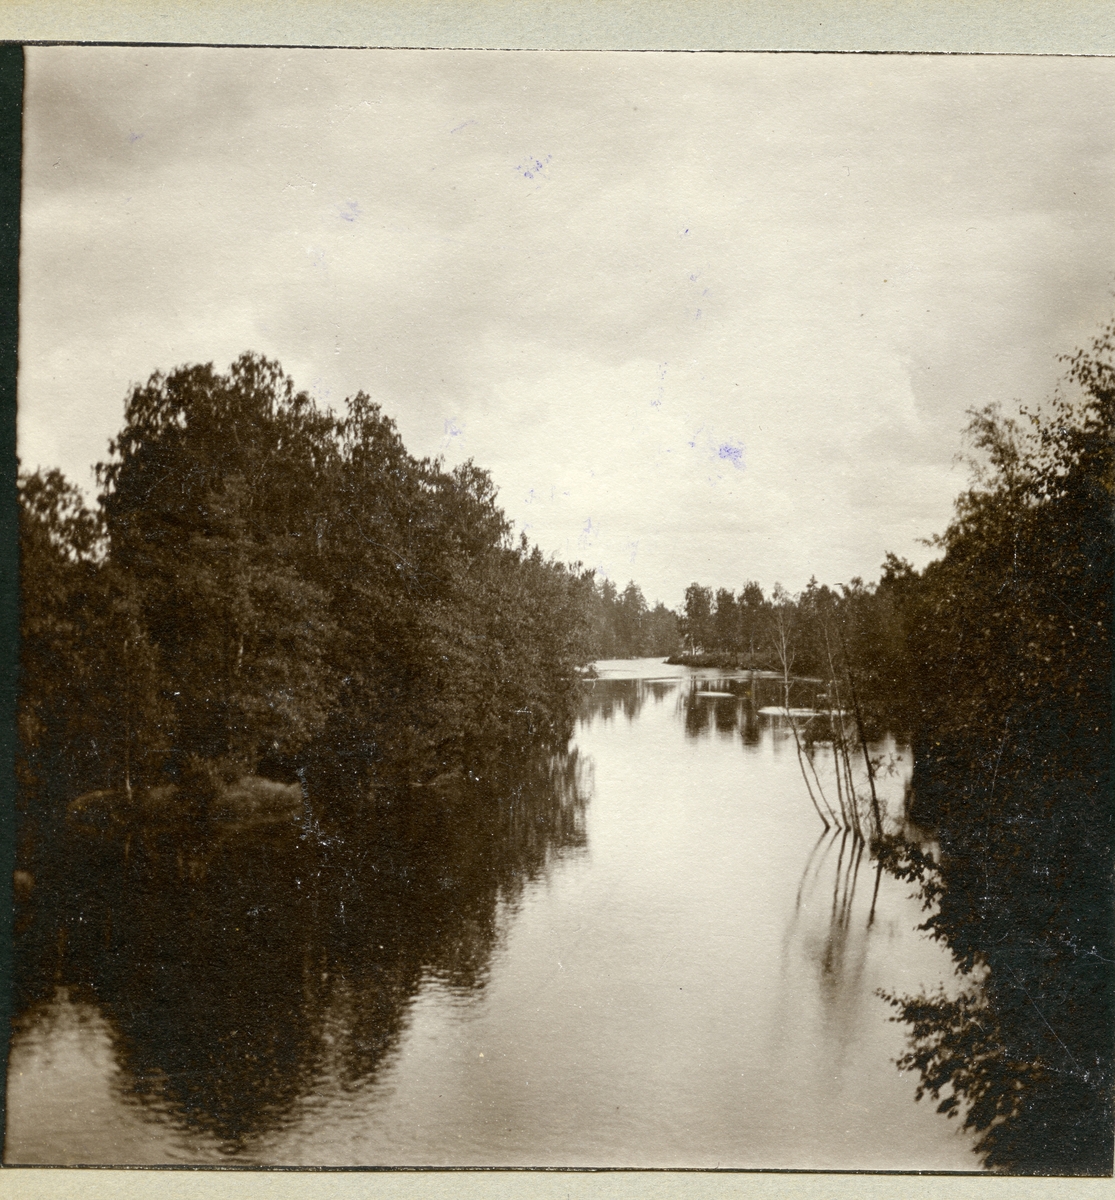 Västanfors sn, Fagersta kn, Strömsholms kanal.
Stereoskopiskt foto (3-D), 1909.